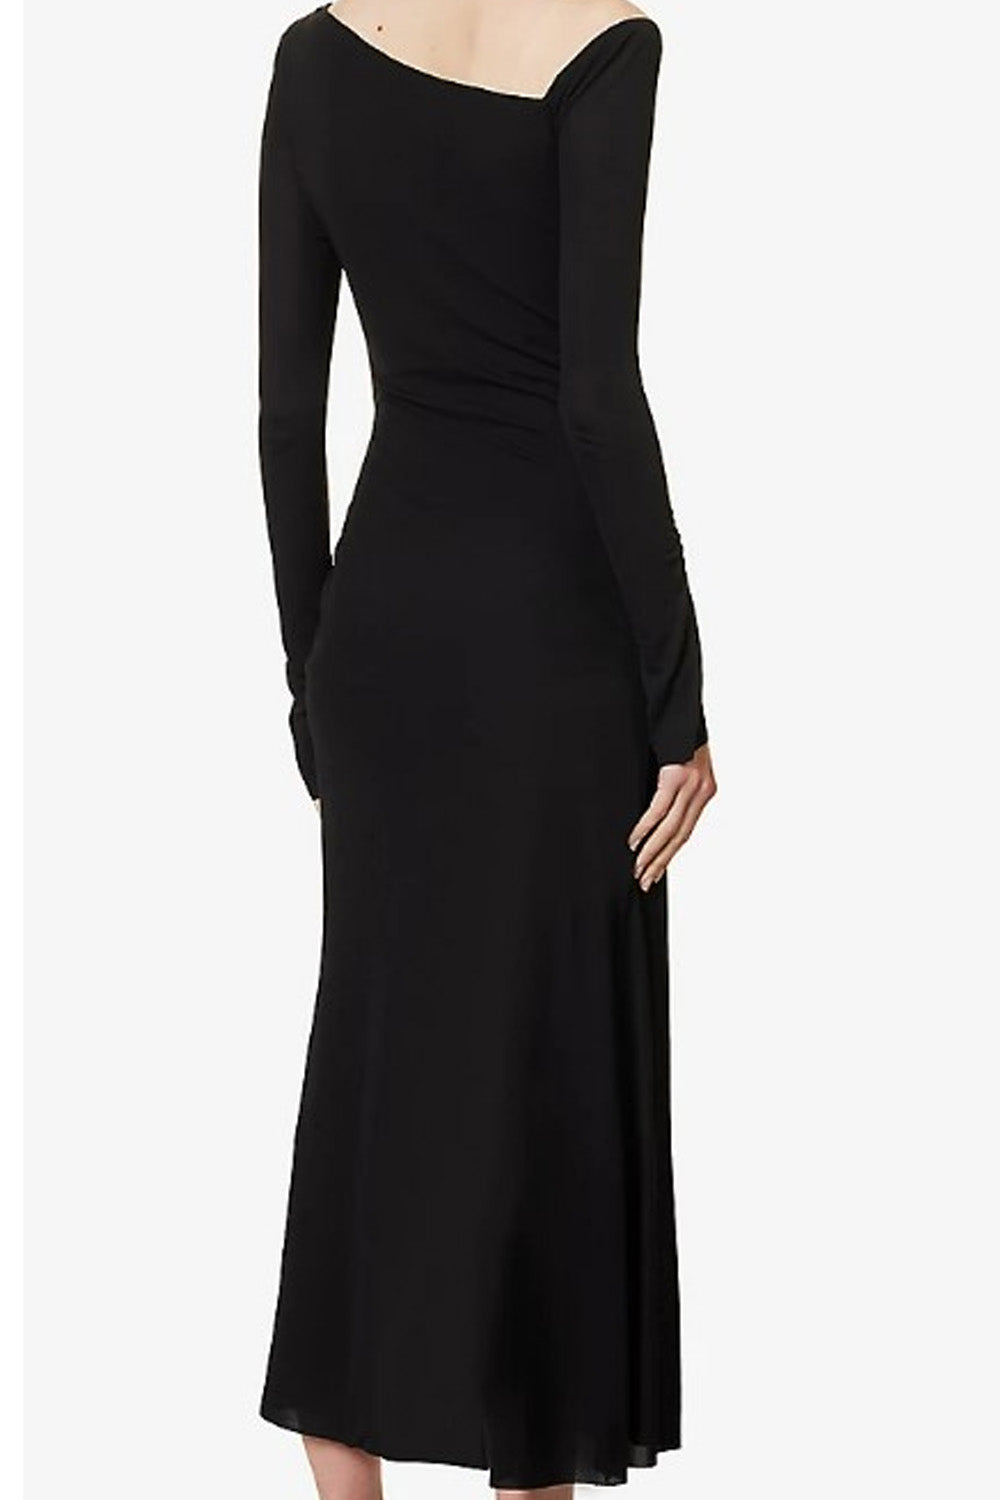 Incandescent Black Dress